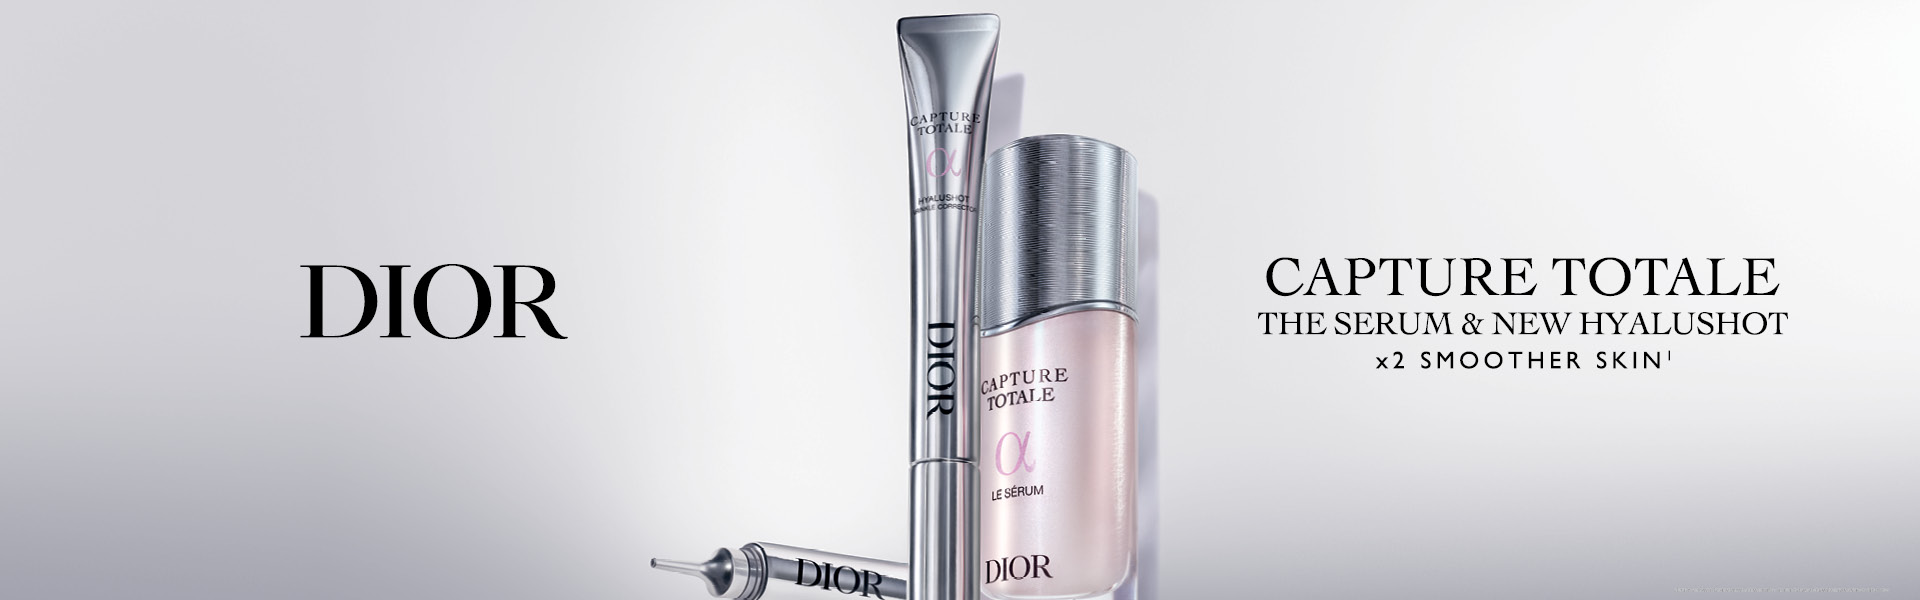 Dior Beauty, Skincare, Age Delay Skincare Regime, Dior Prestige, Cleansers, Toners, Hydration, Protection, Premium Skincare